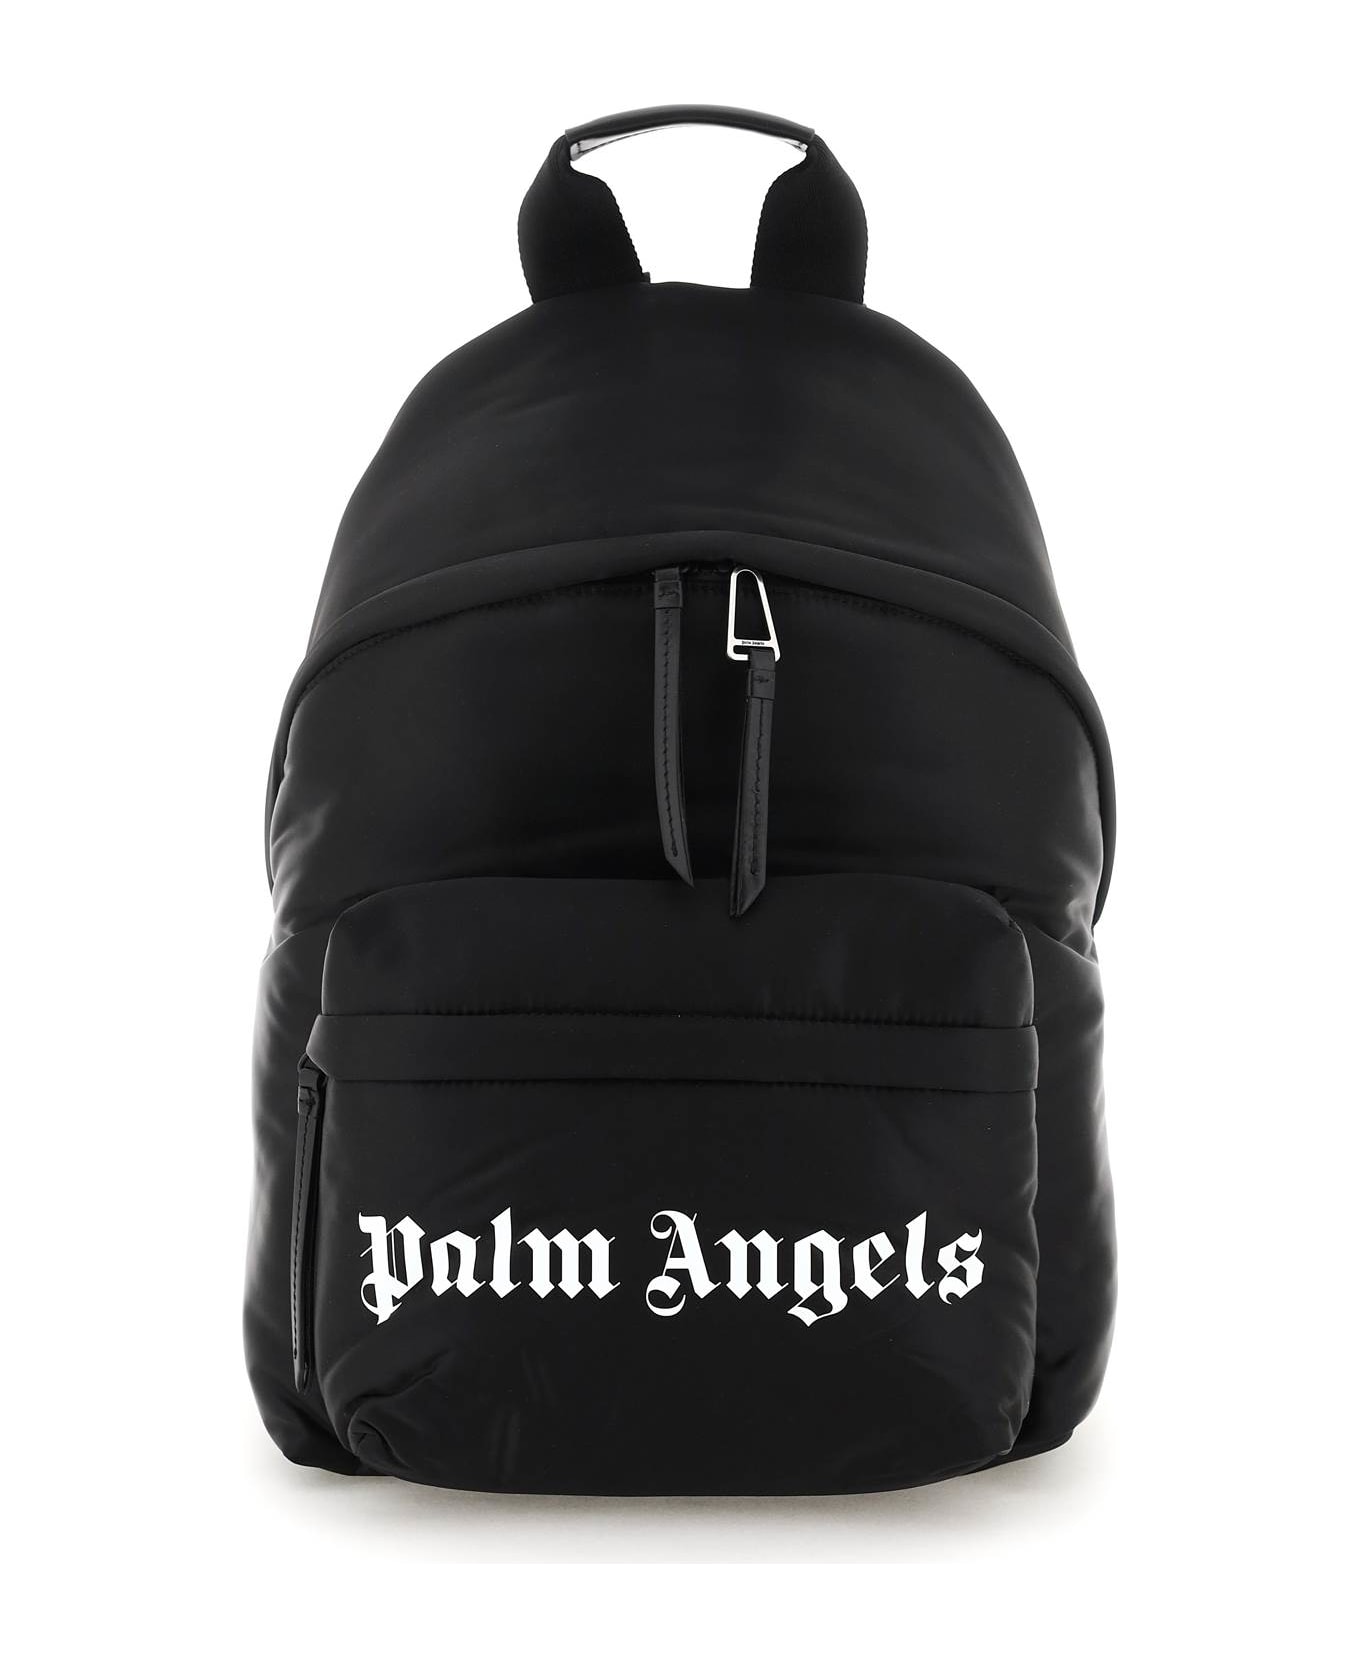 Palm Angels Logo Print Backpack - Black